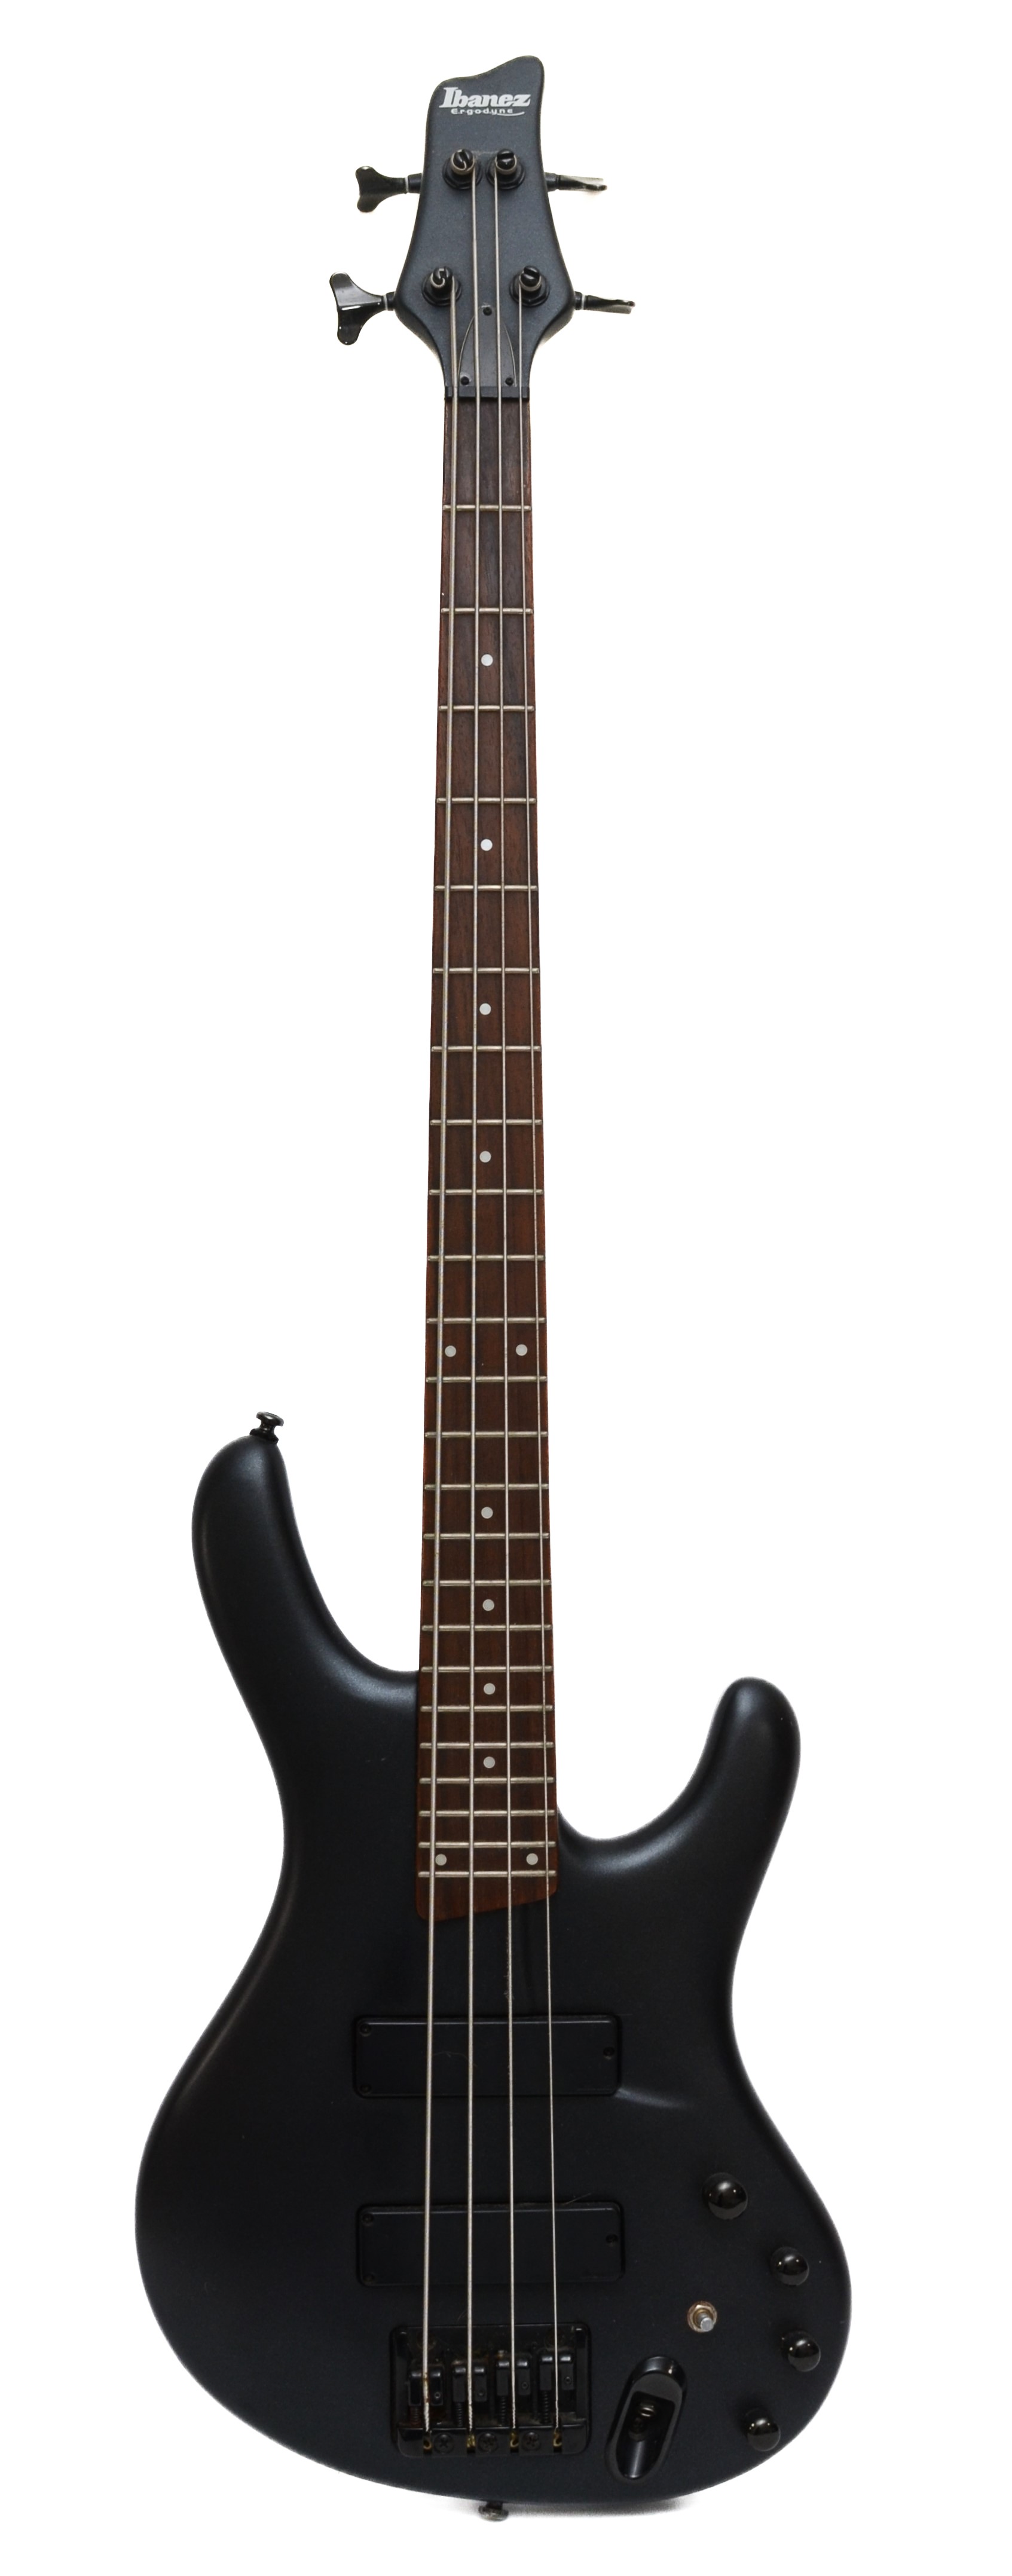 A Ibanez Ergodyne bass guitar, twin Ibanez pickups, black colourway, matt finish, 27inch neck length